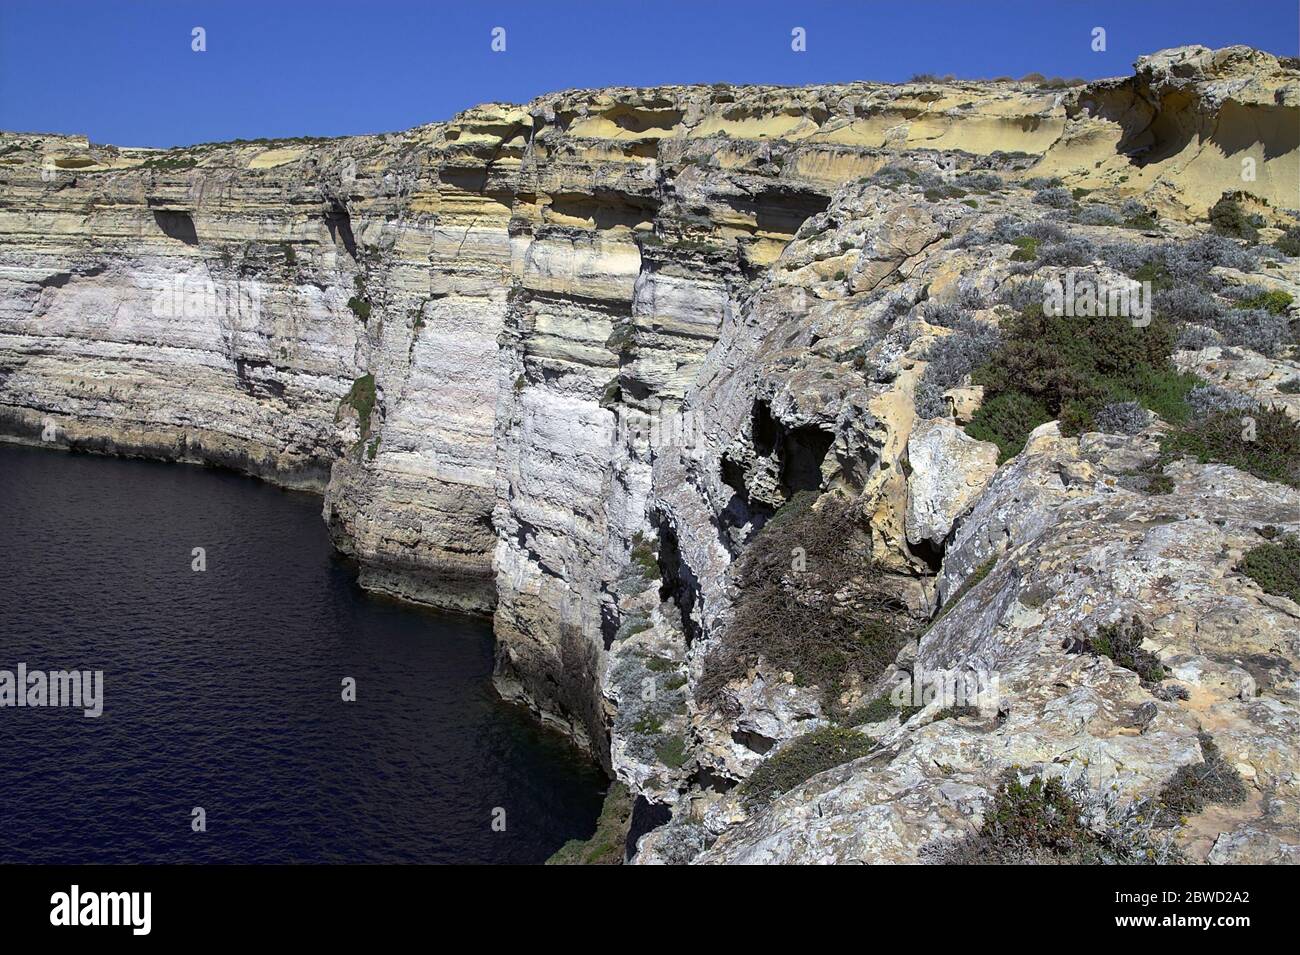 Malta Gozo Coastal cliffs in Dwejra Bay. Küstenklippen in Dwejra Bay.  Acantilados costeros en la bahía de Dwejra. Nadmorskie klify 馬耳他，戈佐島，在德韋拉灣的沿海懸崖 Stock Photo